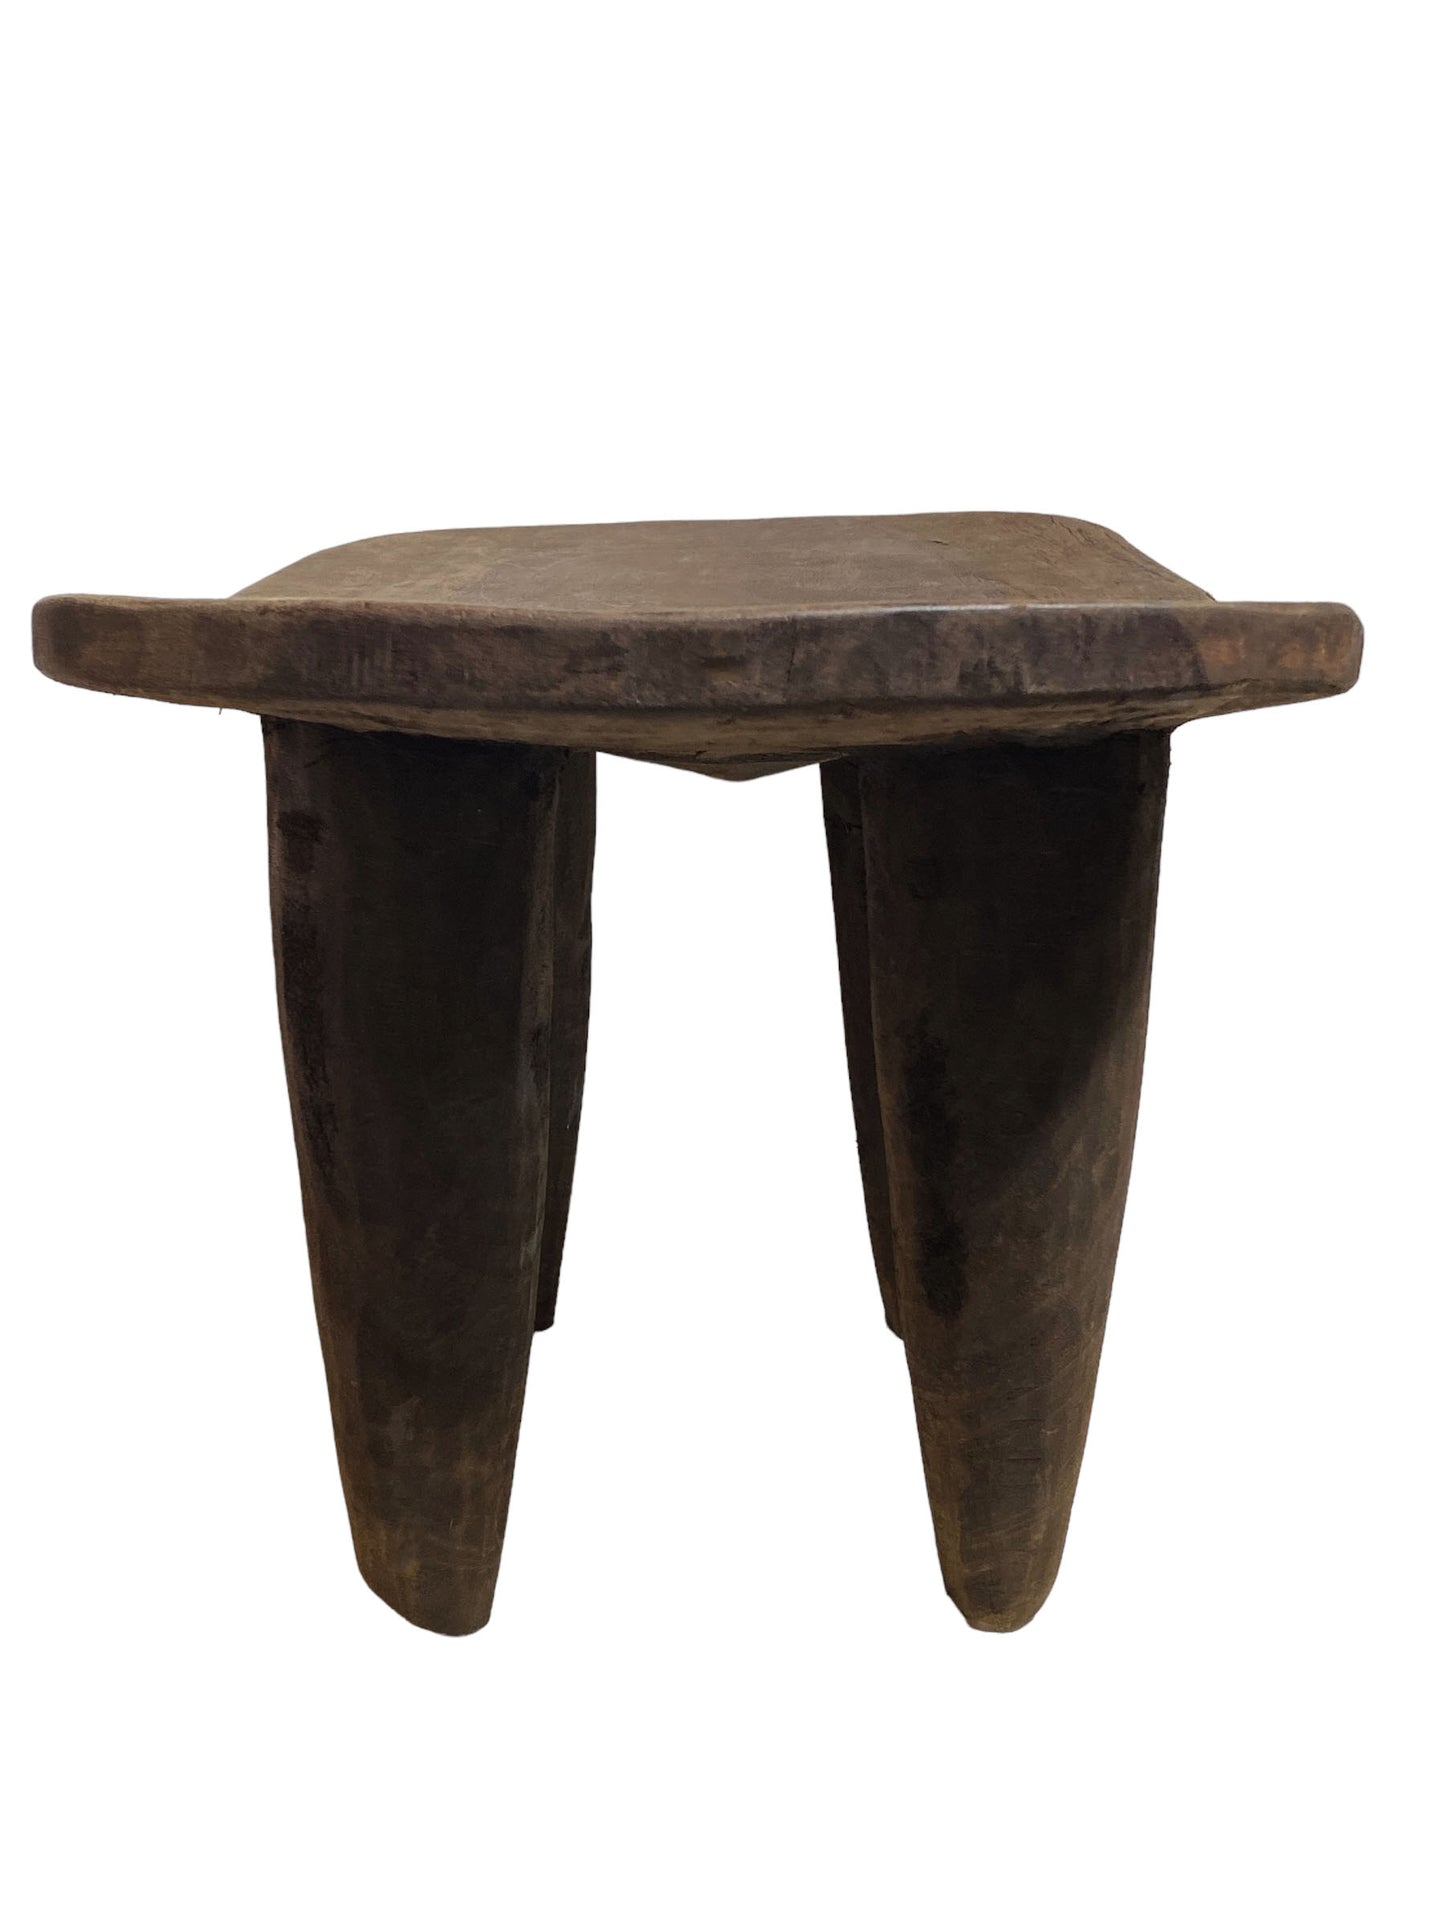 # 5579 Superb Old Rustic African Senufo Stool / Table  I coast  23" W